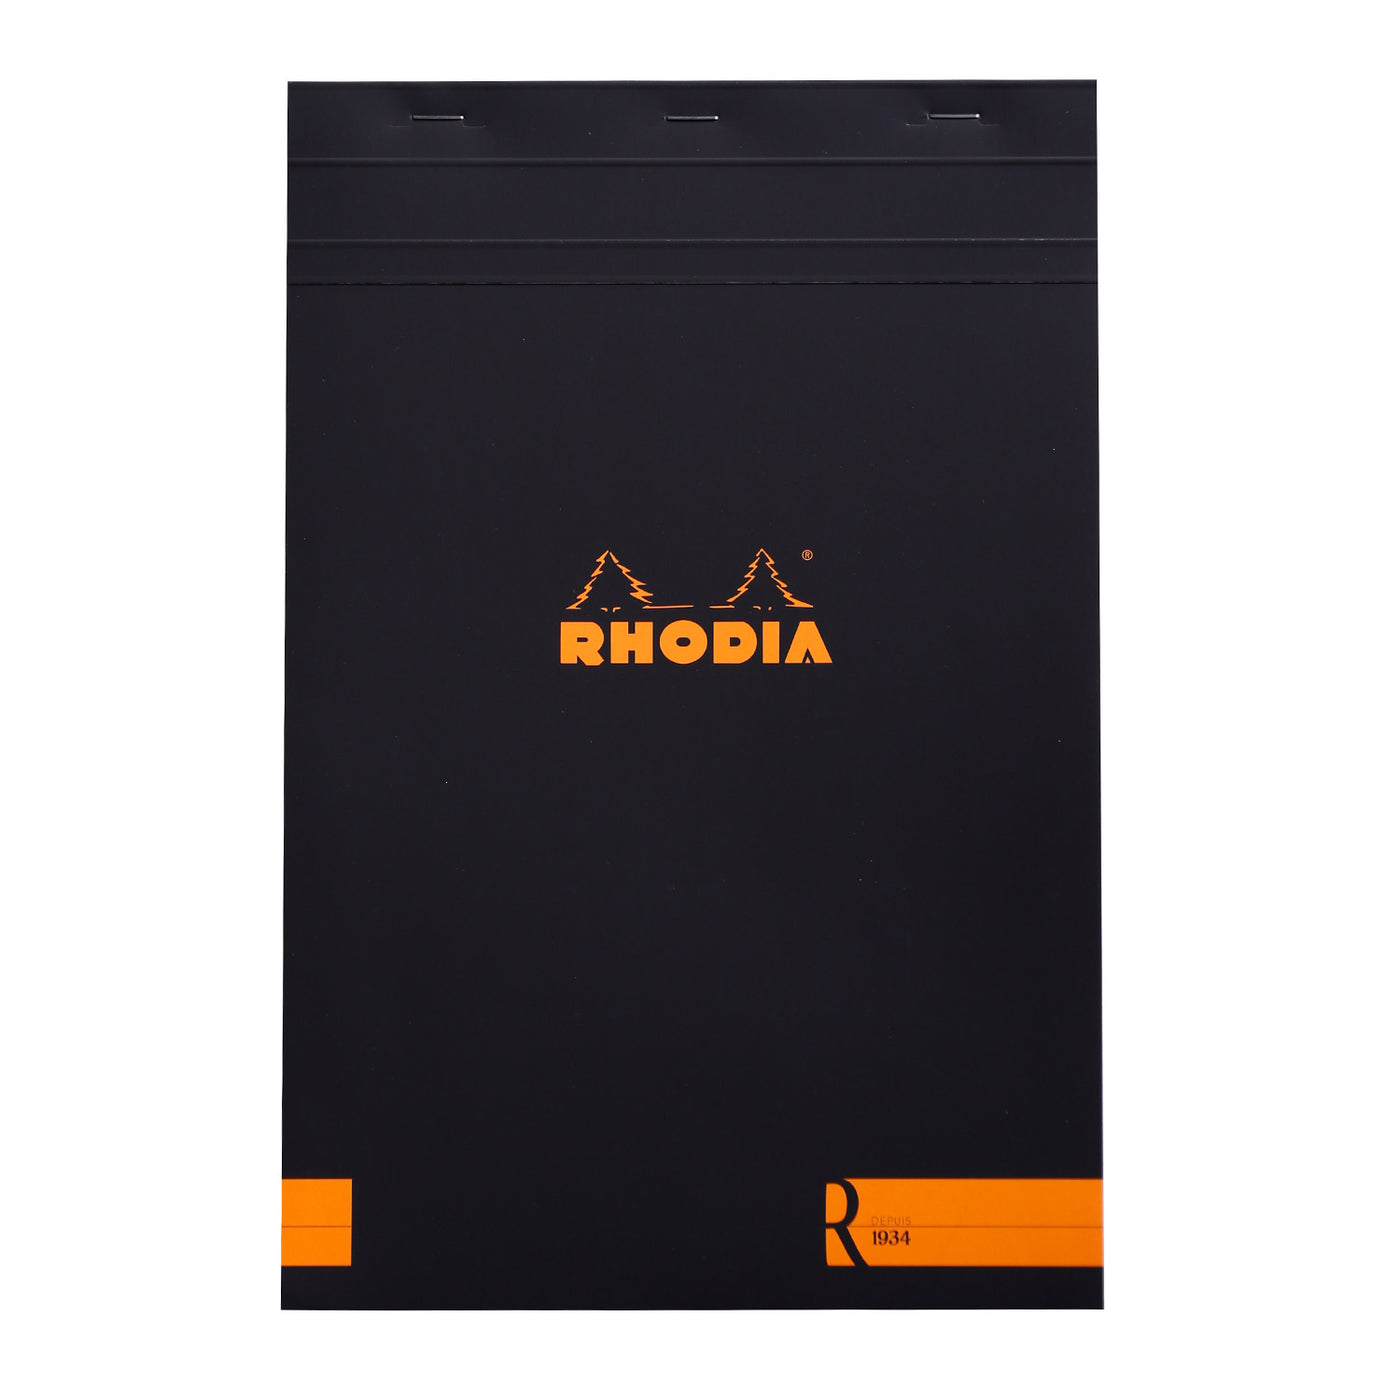 Rhodia No. 19 Black Notepad - A4+, Ruled 1